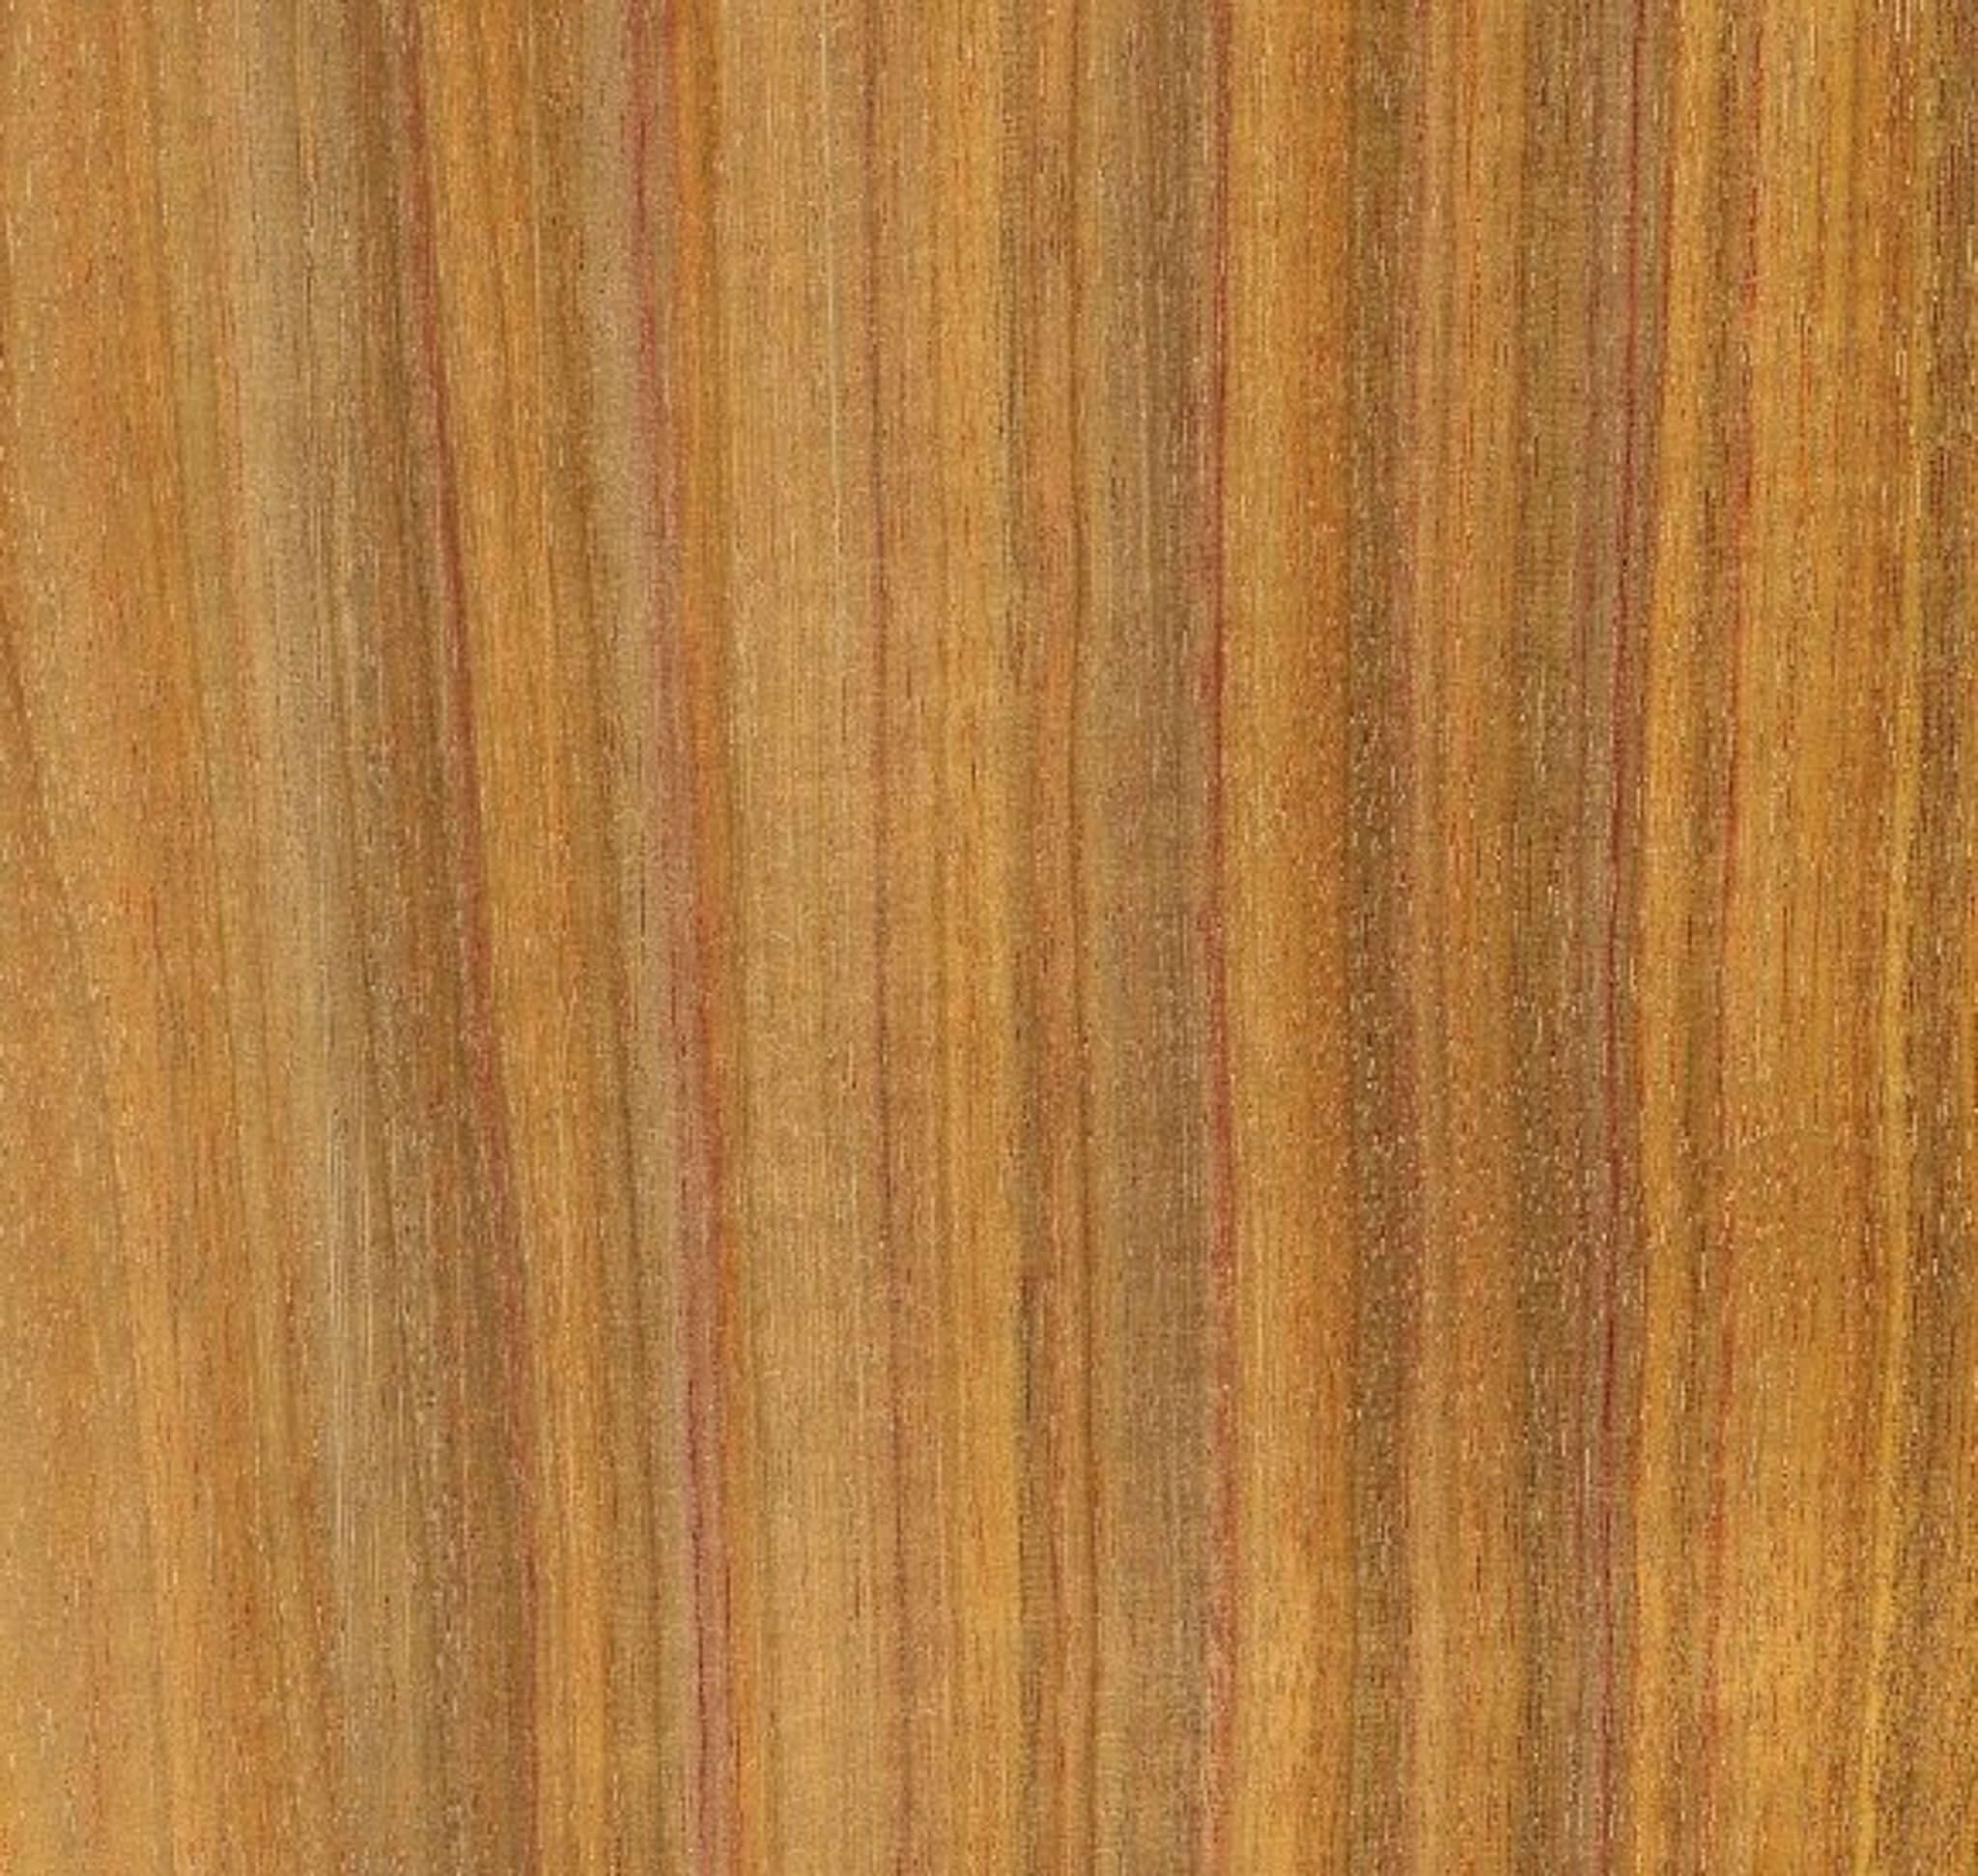 a sample of canarywood wood